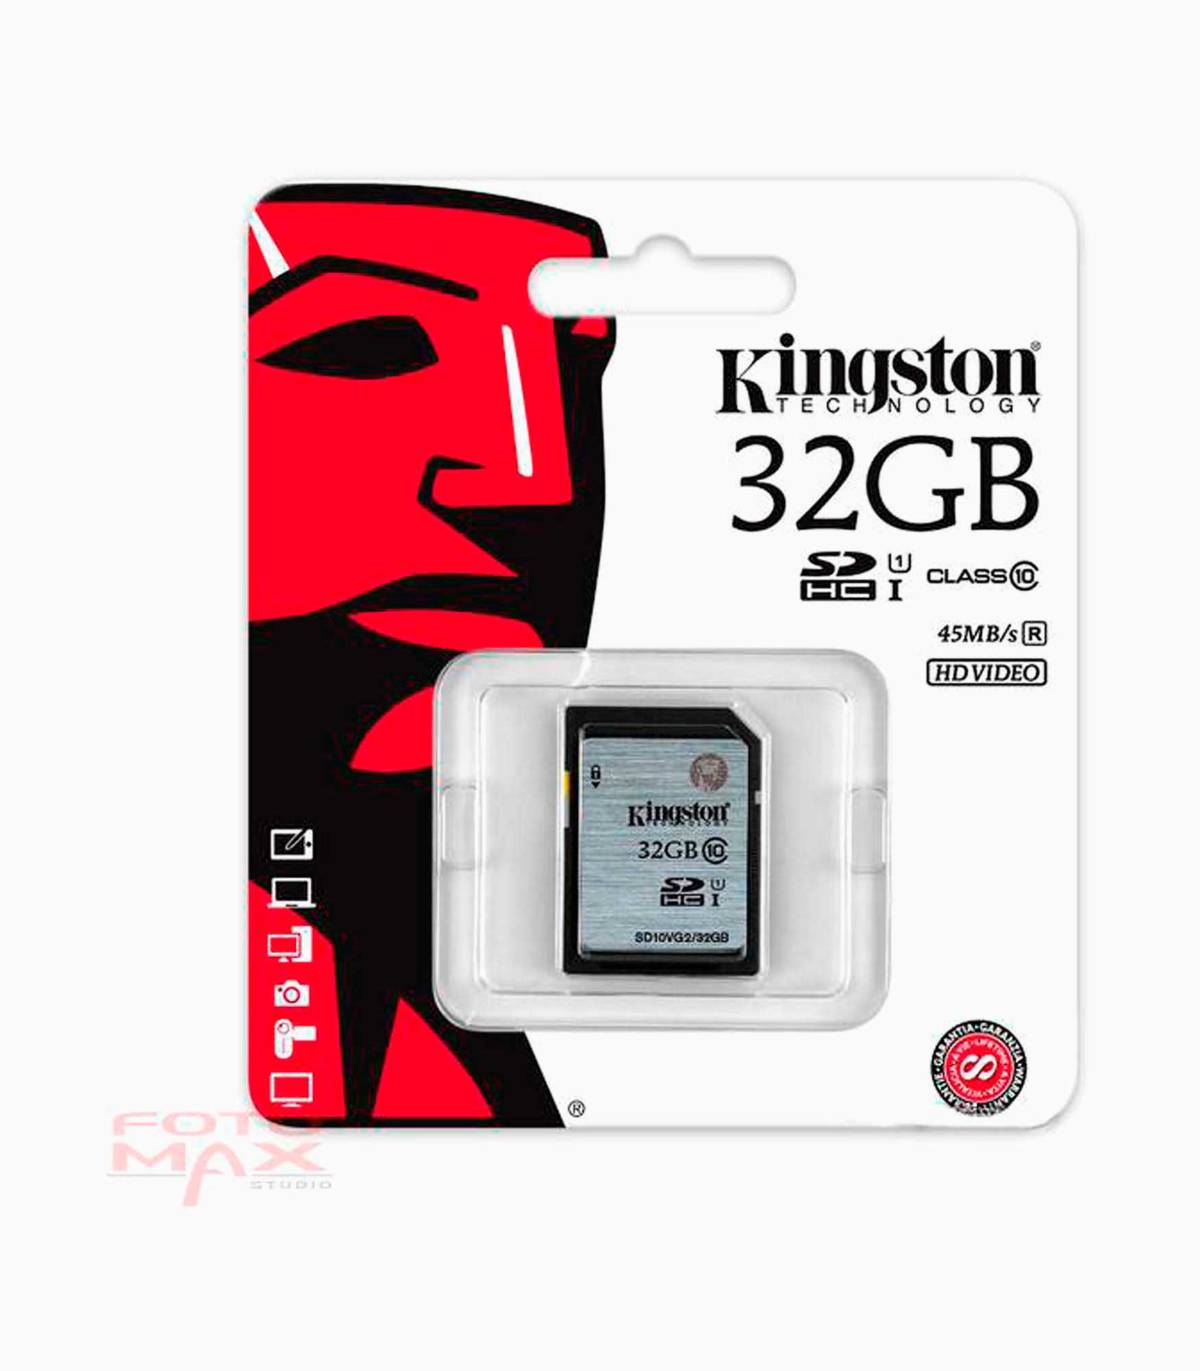 Памяти 64 128 гб. Карта памяти 8gb Kingston sdc10/8gb MICROSDHC class 10 (SD Adapter). Kingston 32 GB MICROSDHC class 10. Kingston Micro SDXC 128gb class 10 UHS-I u1. Kingston Micro SDHC 256gb class10 sdcs2 + adapt.